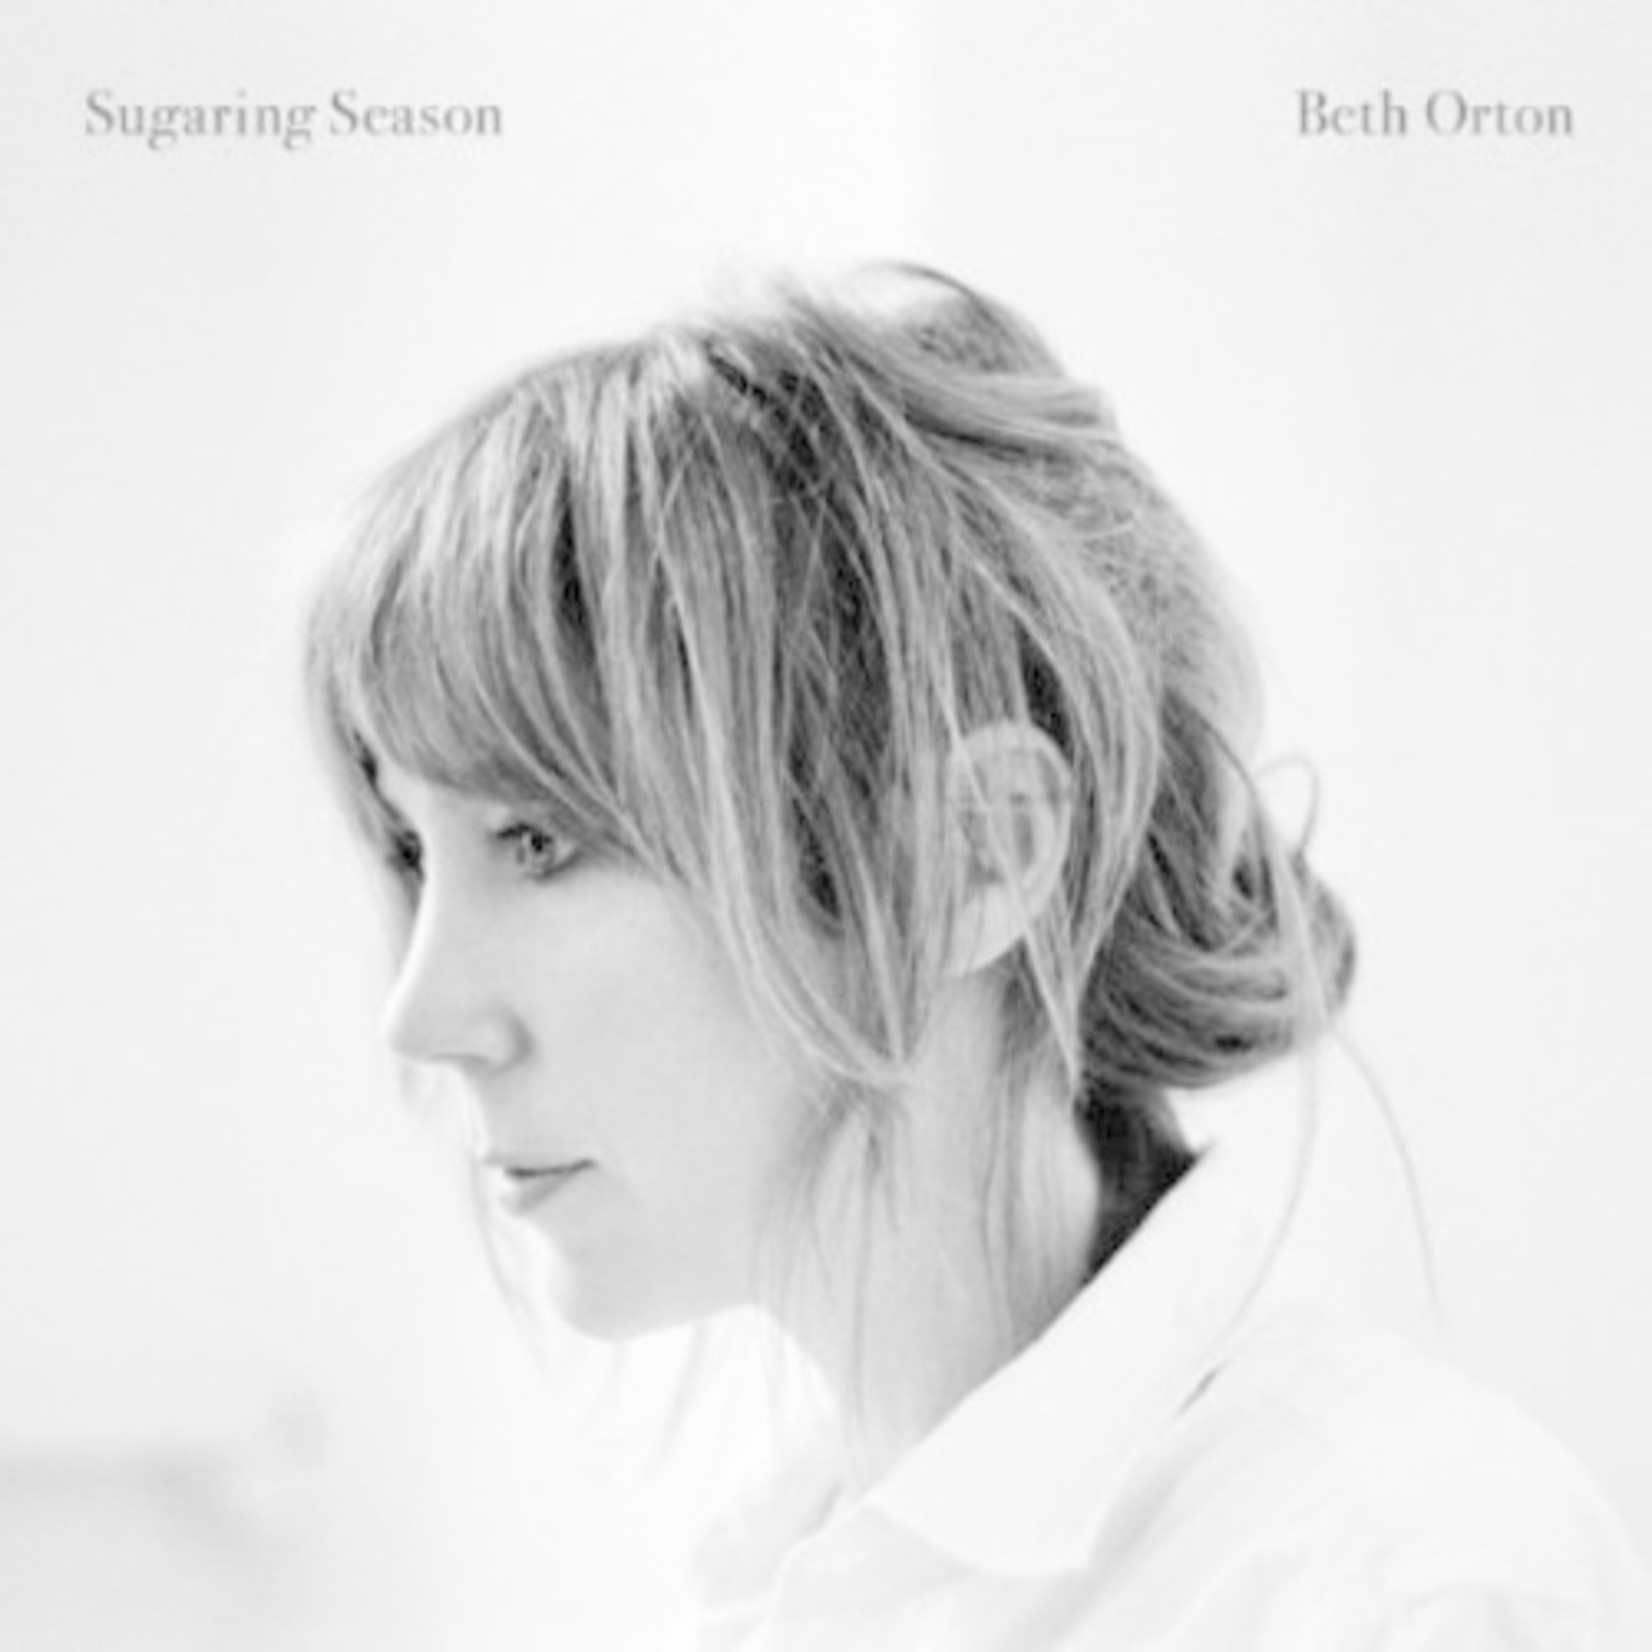 ANTI- Beth Orton - Sugaring Season (LP+CD)